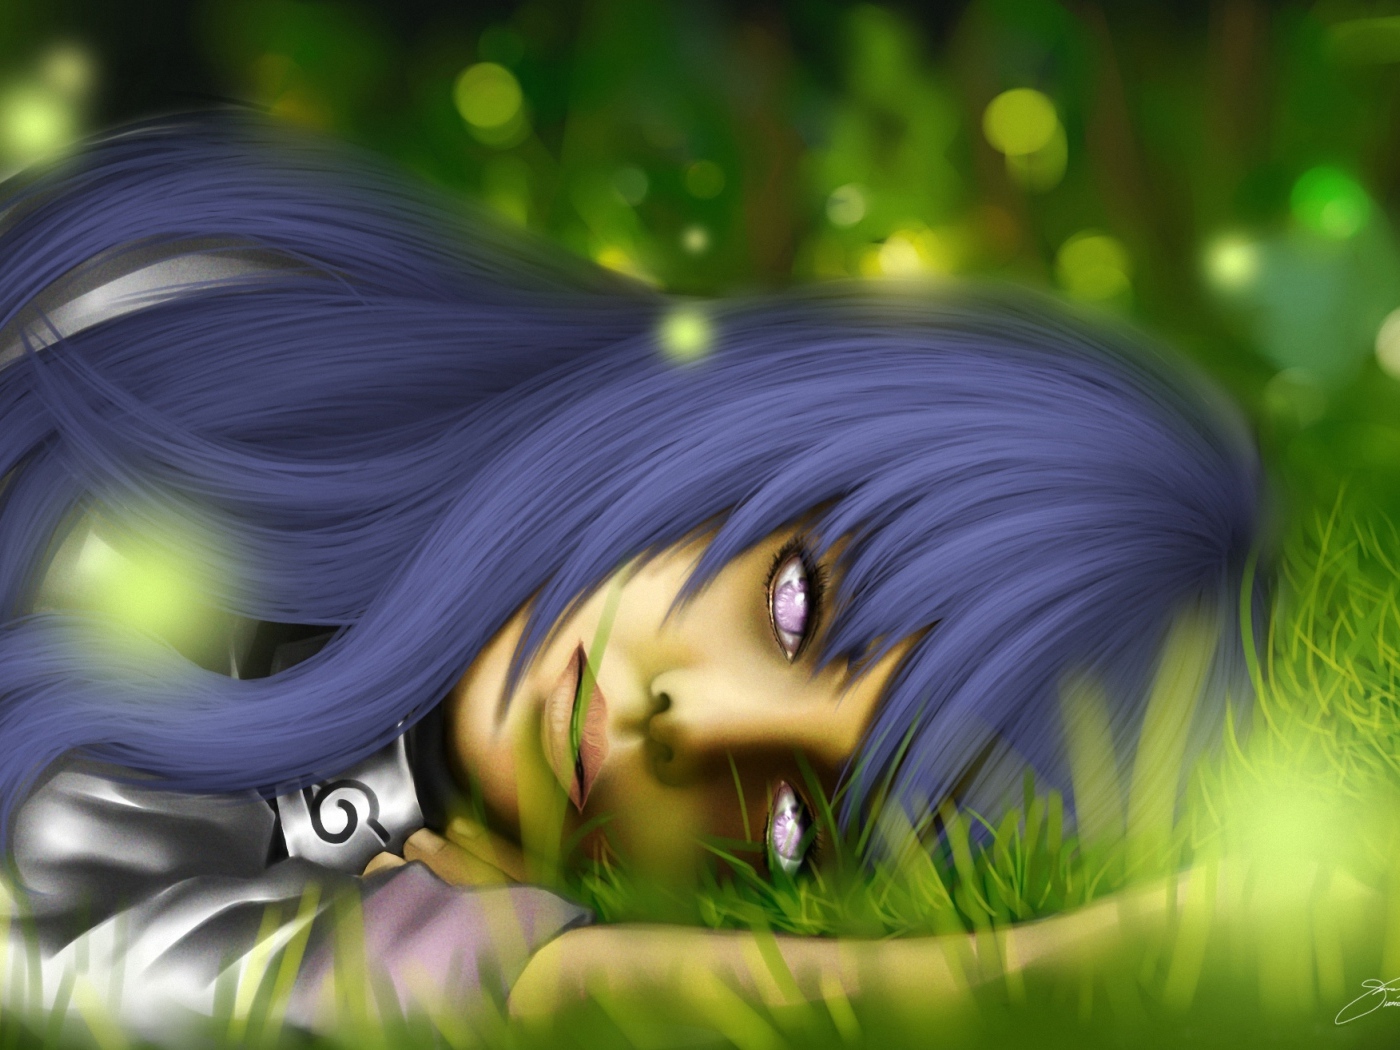 Hinata lies on the grass